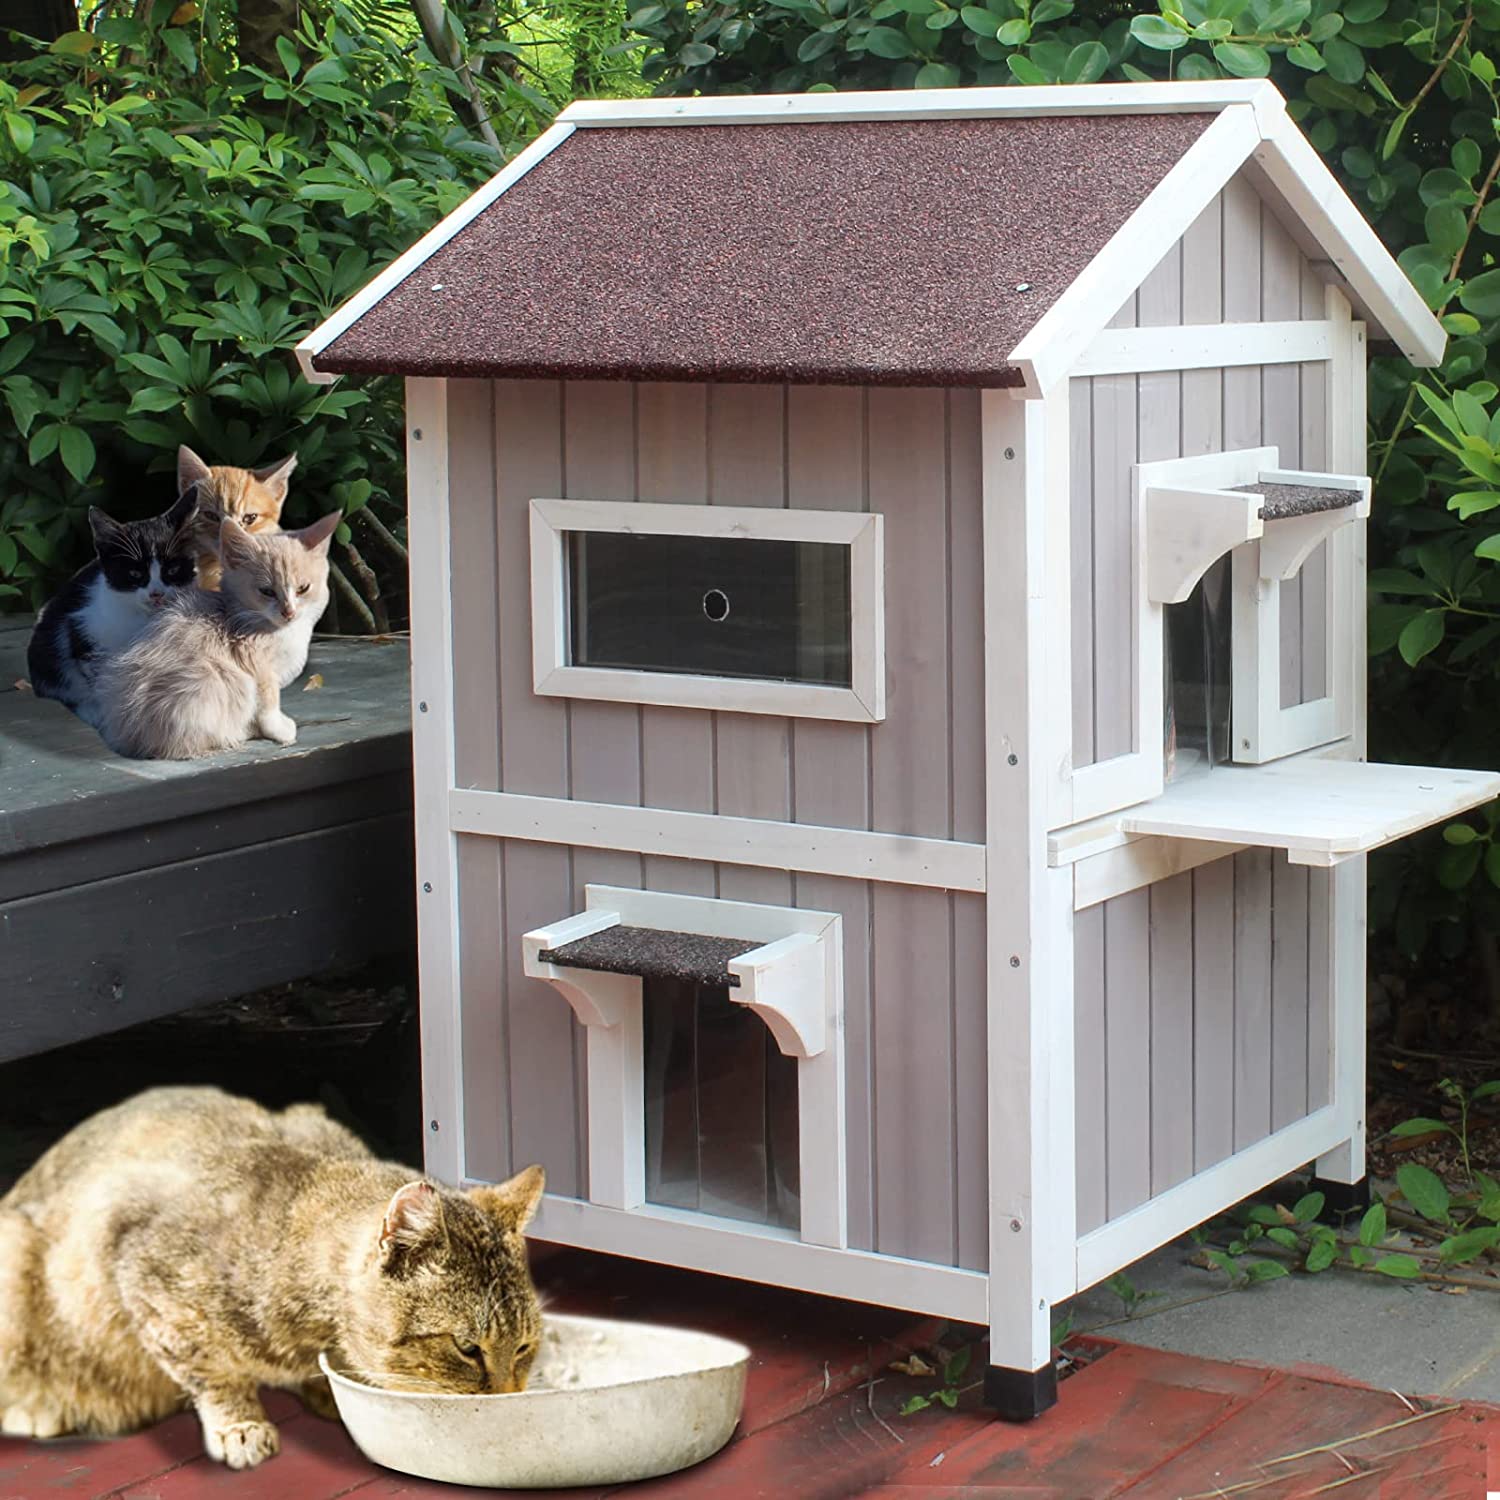 Feral cat feeding station, Outdoor cat feeding station